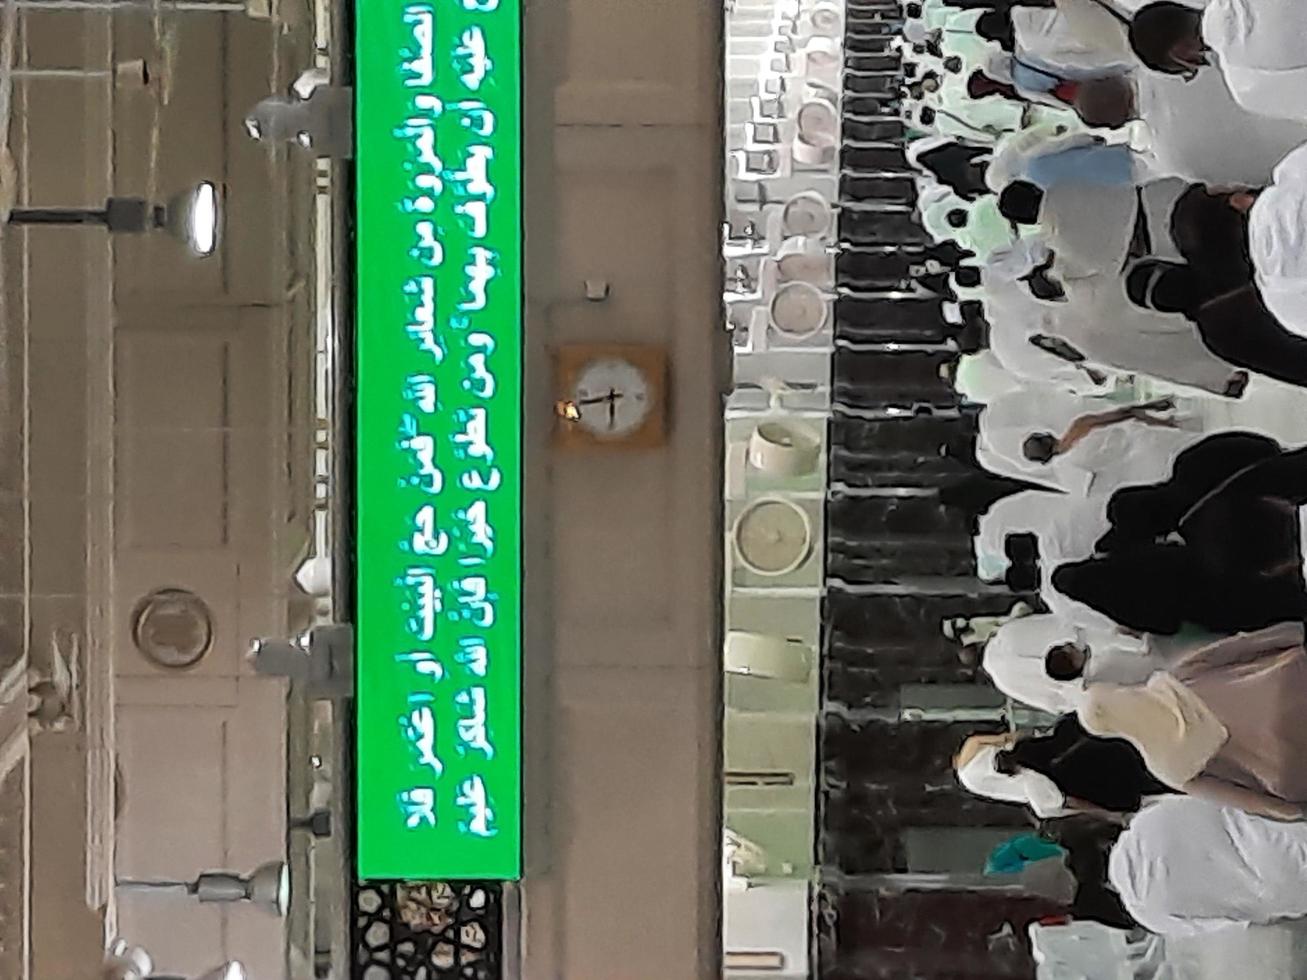 makkah, saudi-arabien, 2021 - schöne aussicht auf sa'i foto